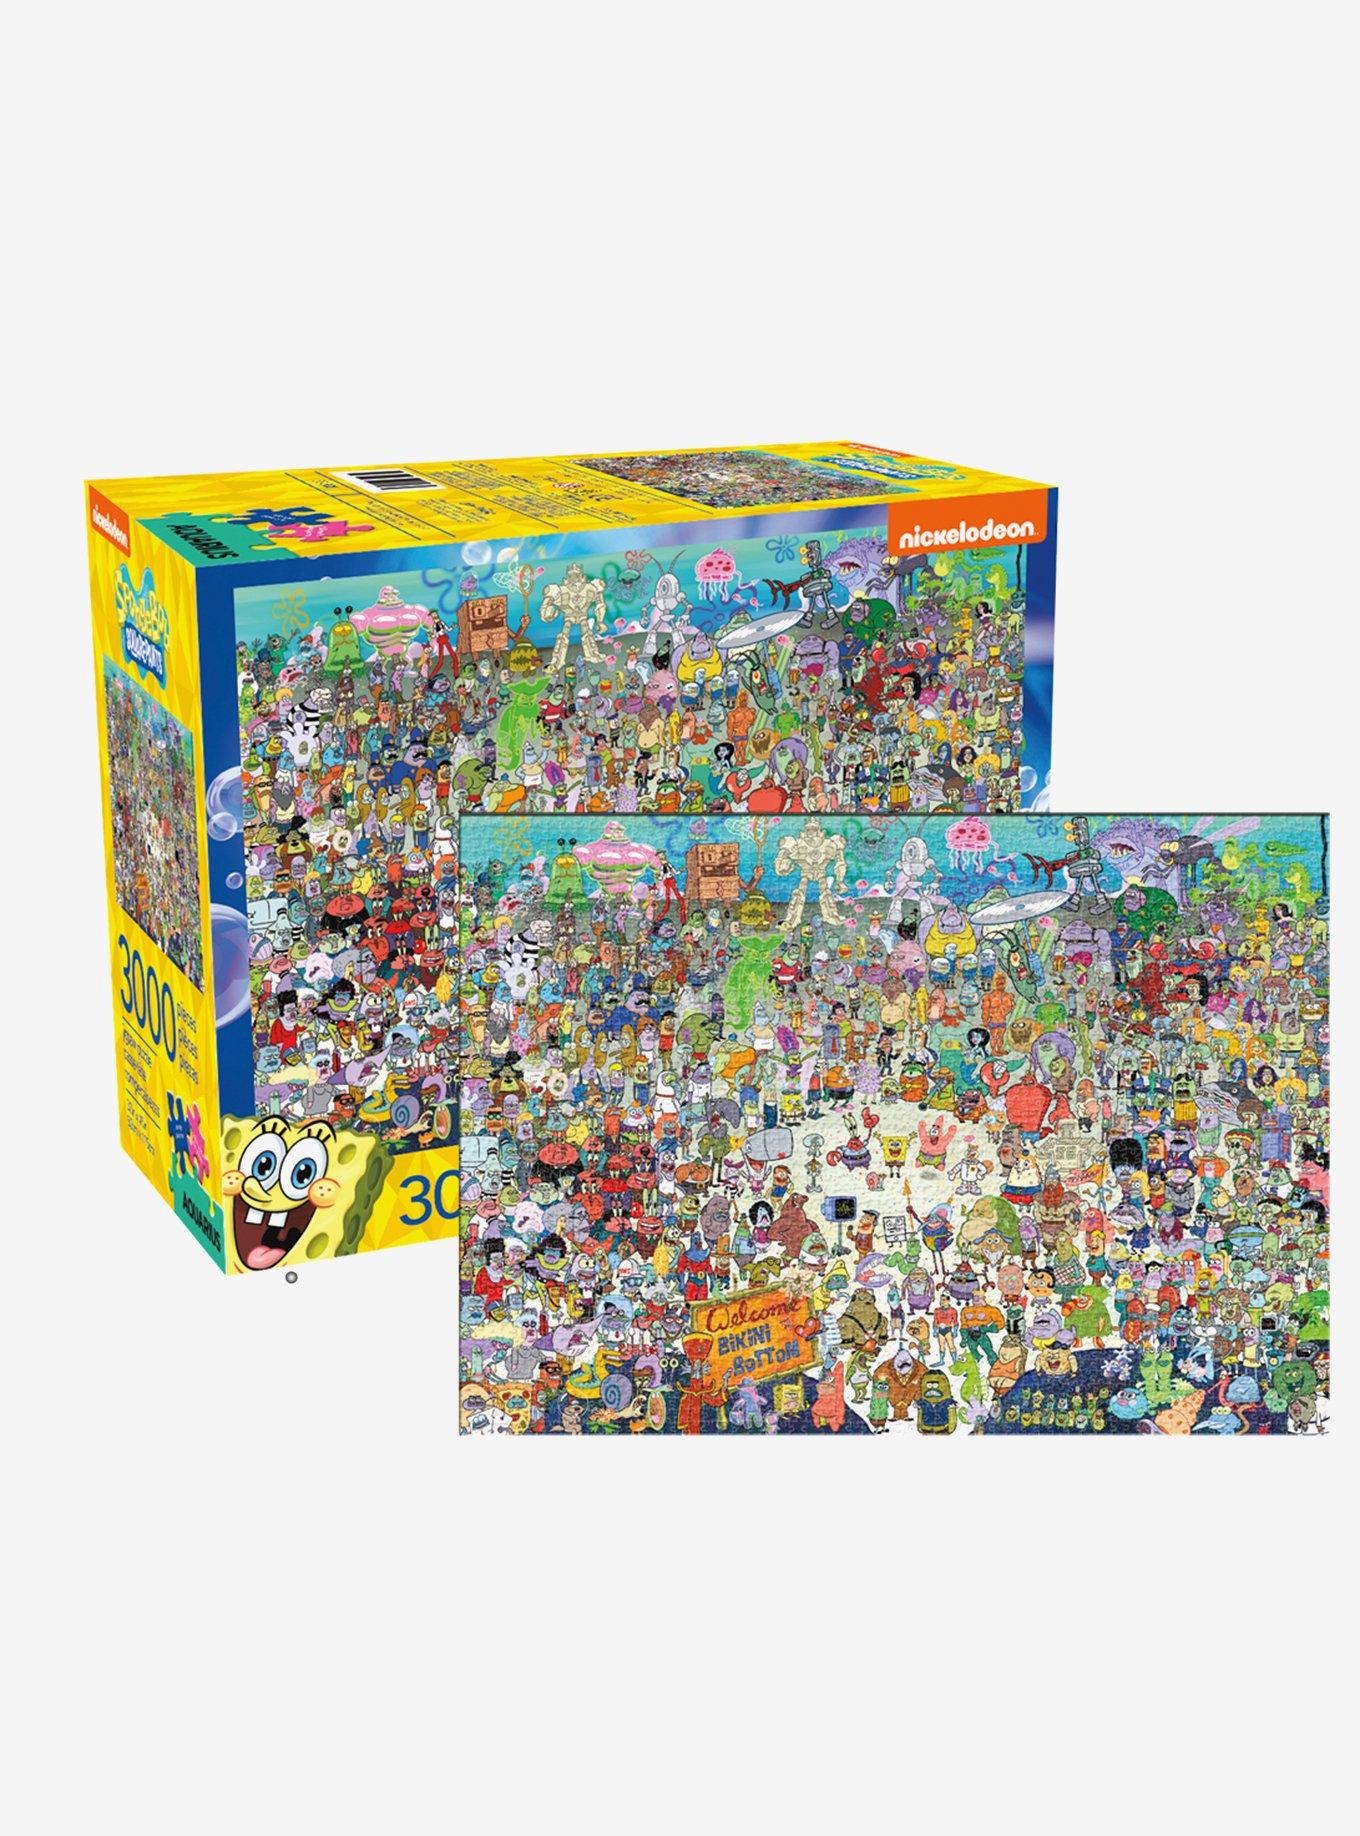 SpongeBob SquarePants Bikini Bottom Citizens 3000-Piece Puzzle, , hi-res